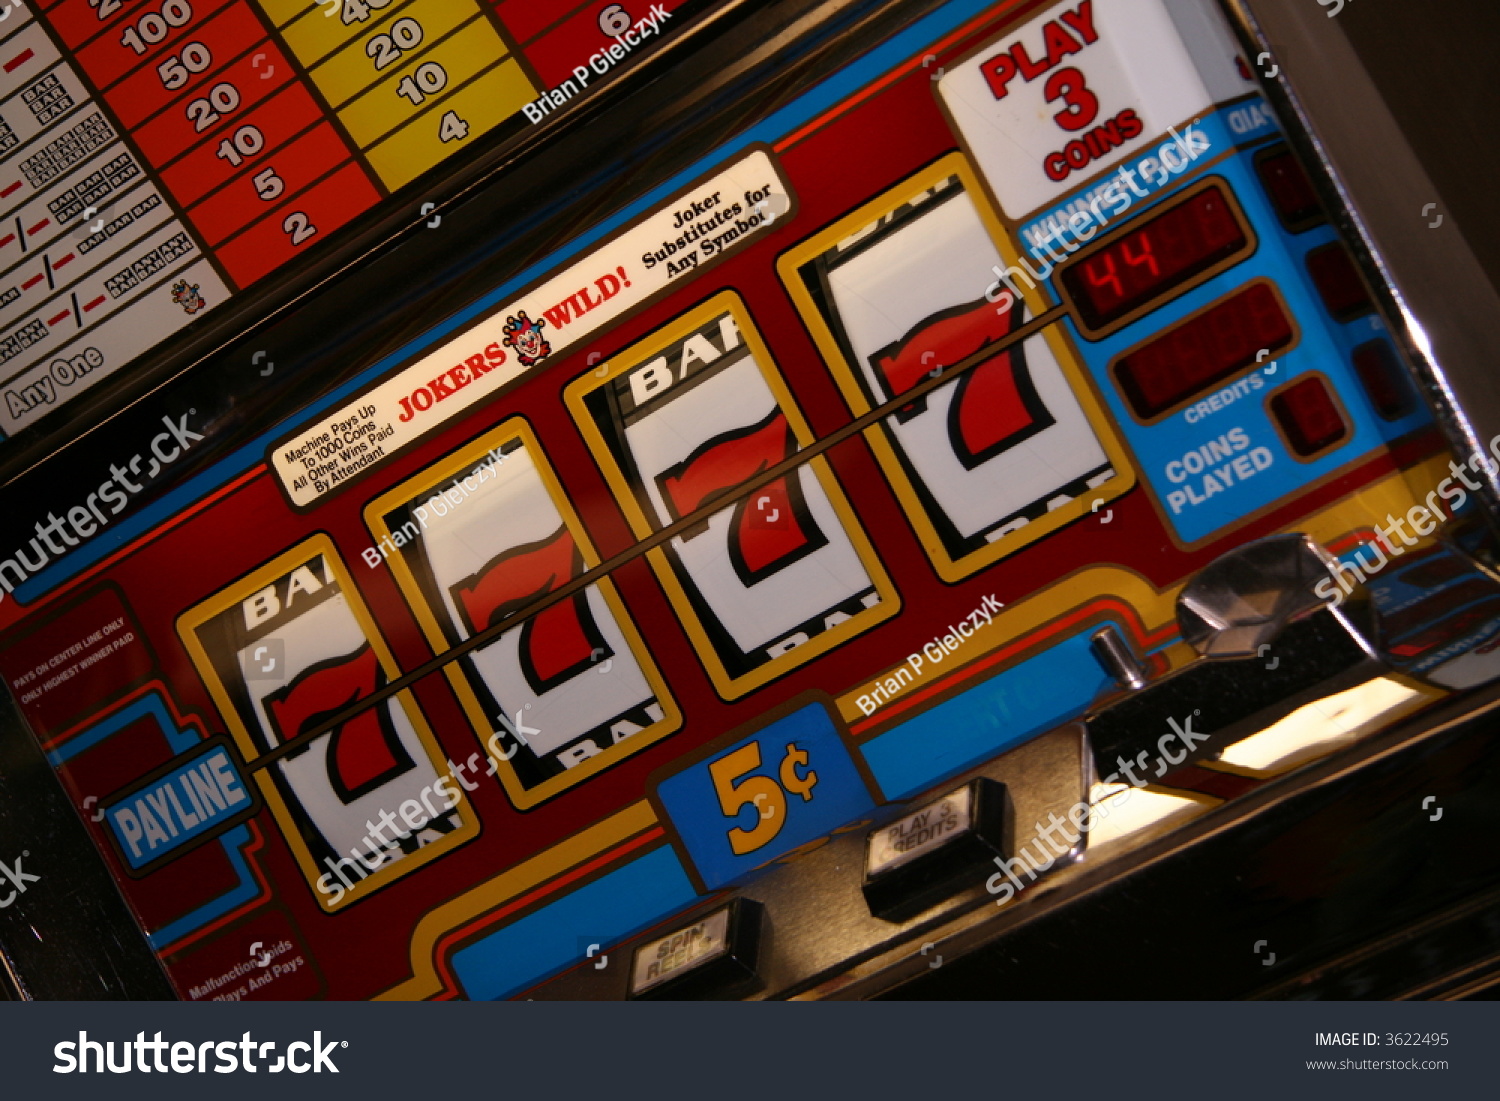 Las vegas slot machine jackpot